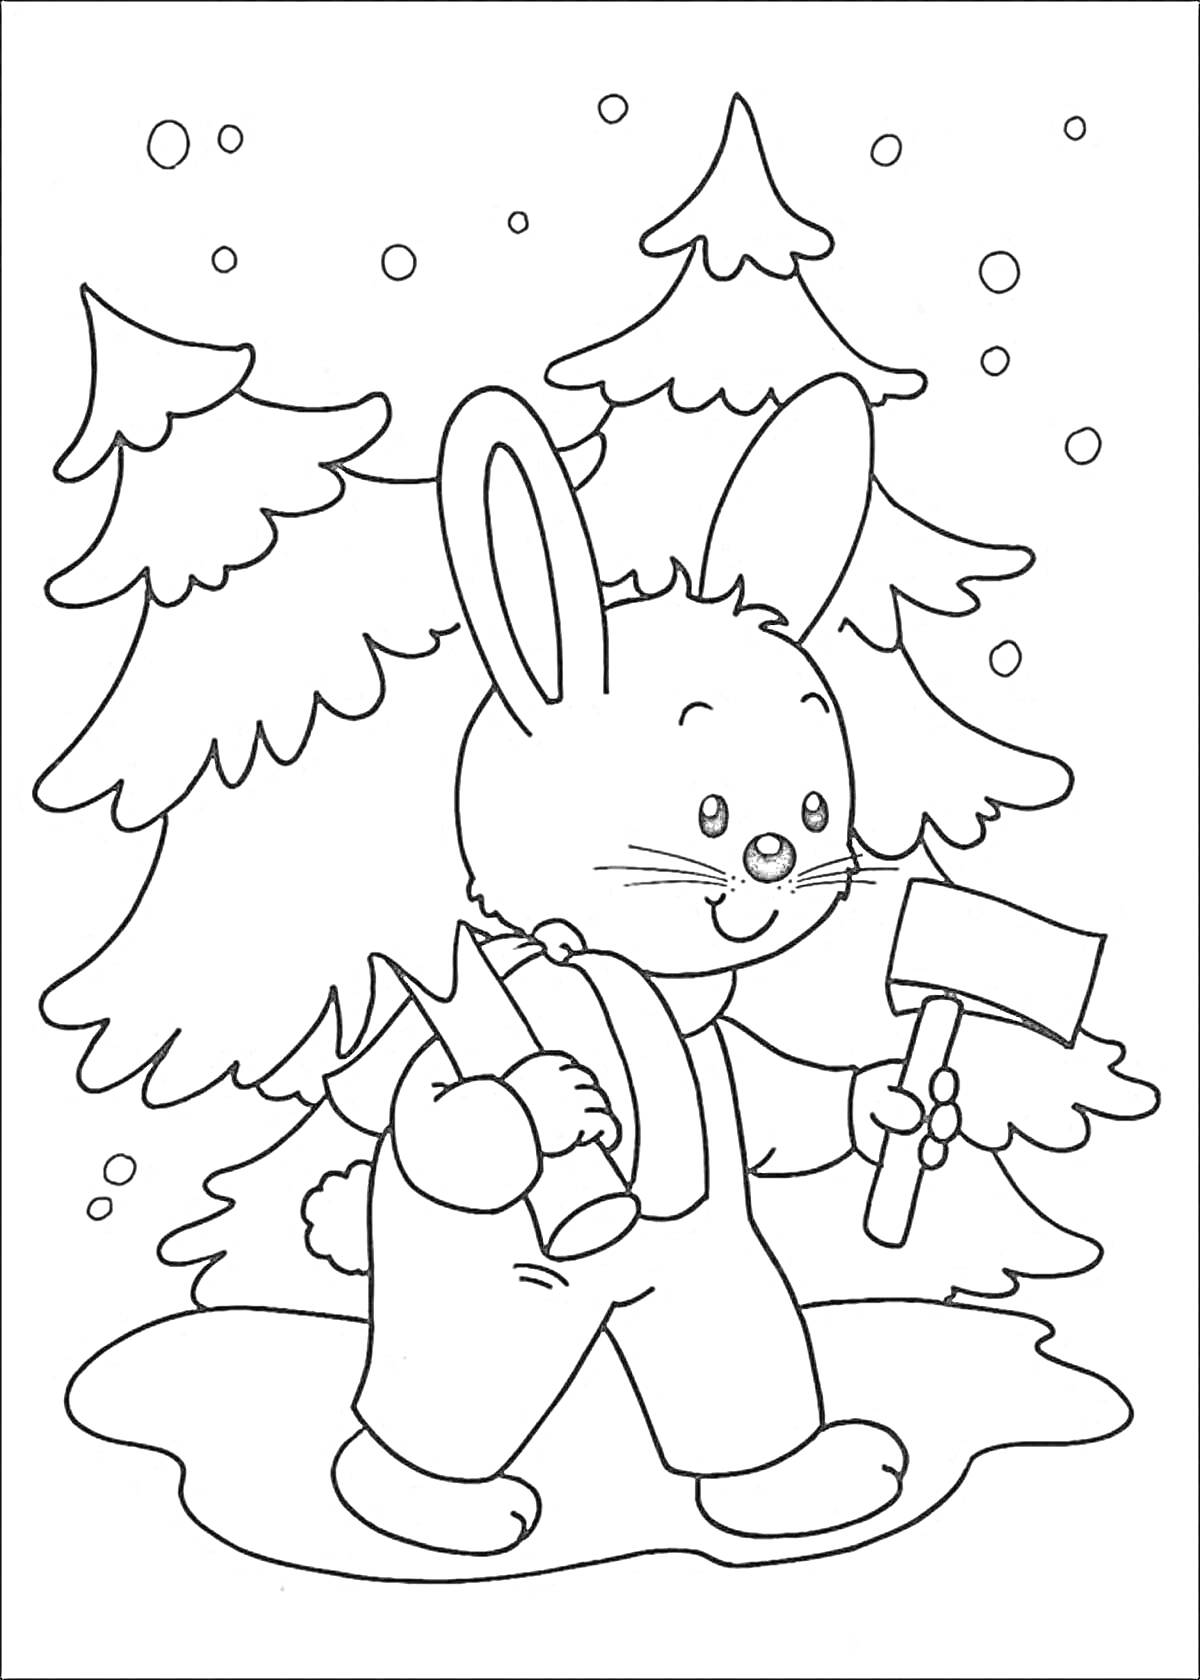 Раскраска Заяц с топором на снегу перед ёлками